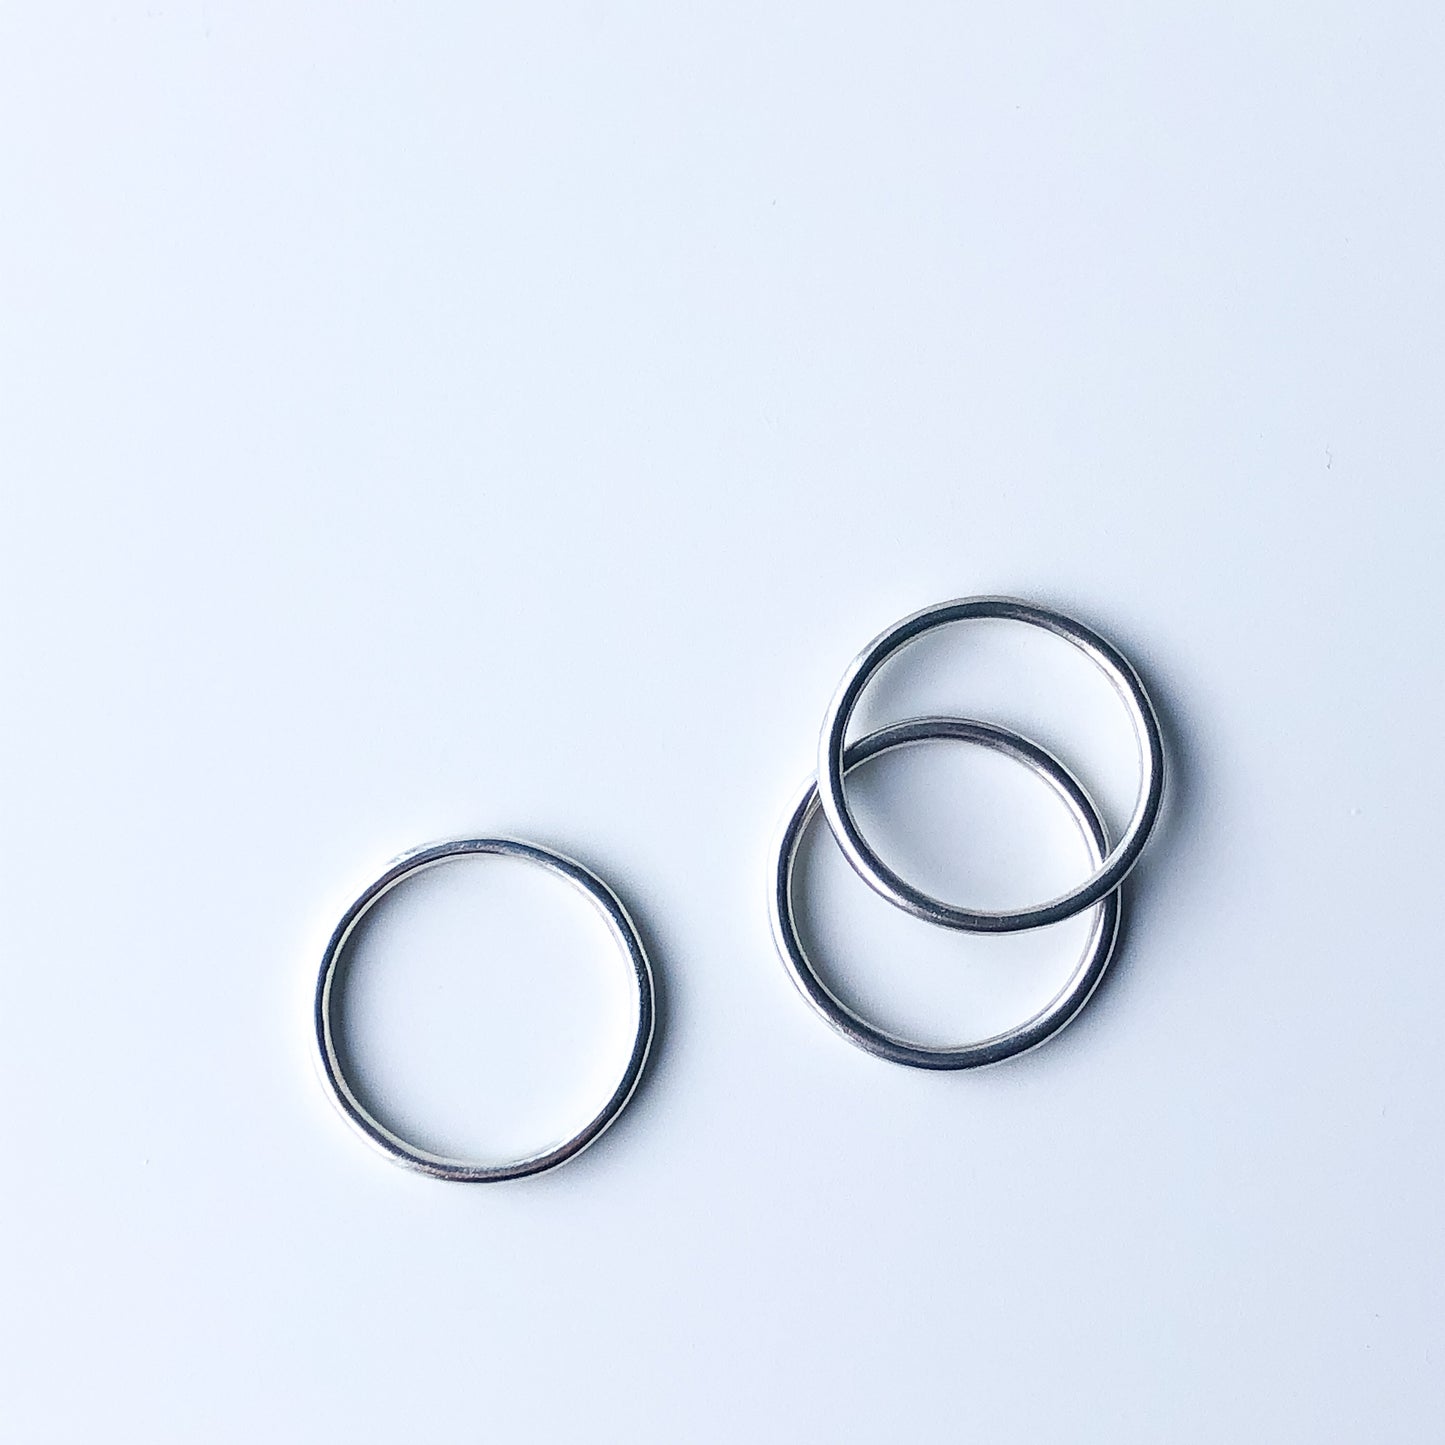 Three plain silver stacking rings